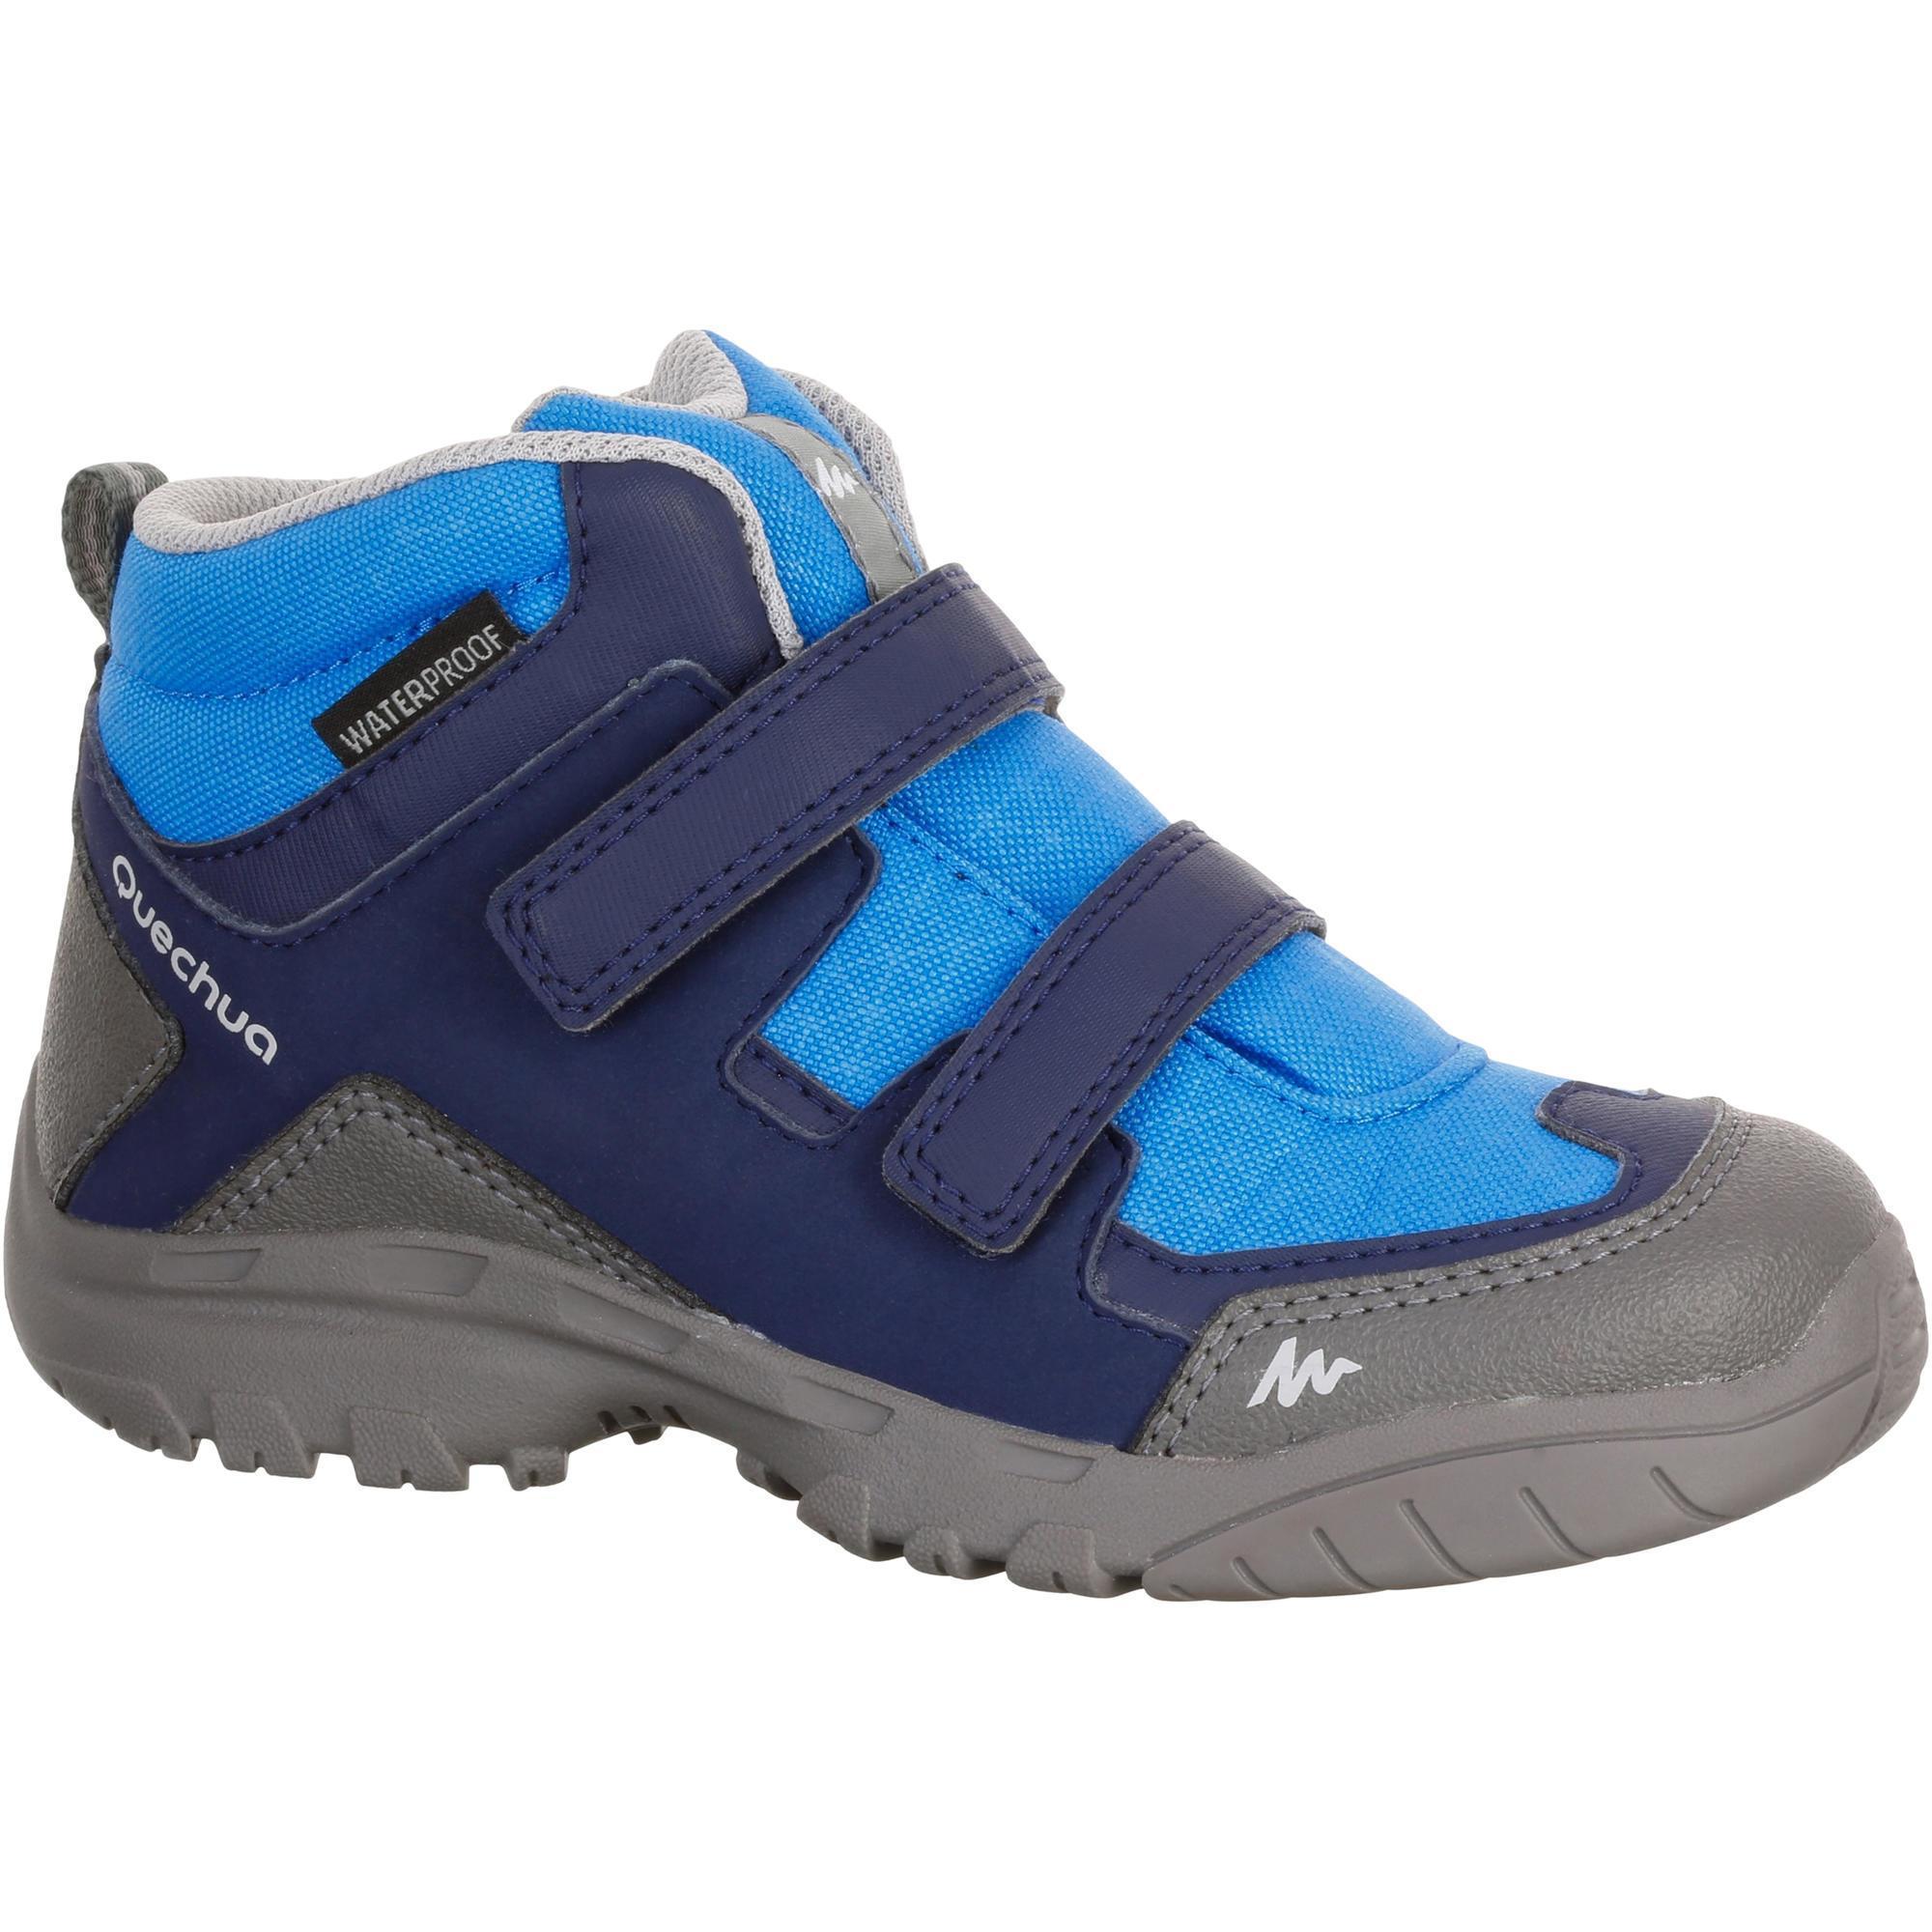 NH500 Mid Waterproof Children's Hiking Shoes - Blue | Quechua